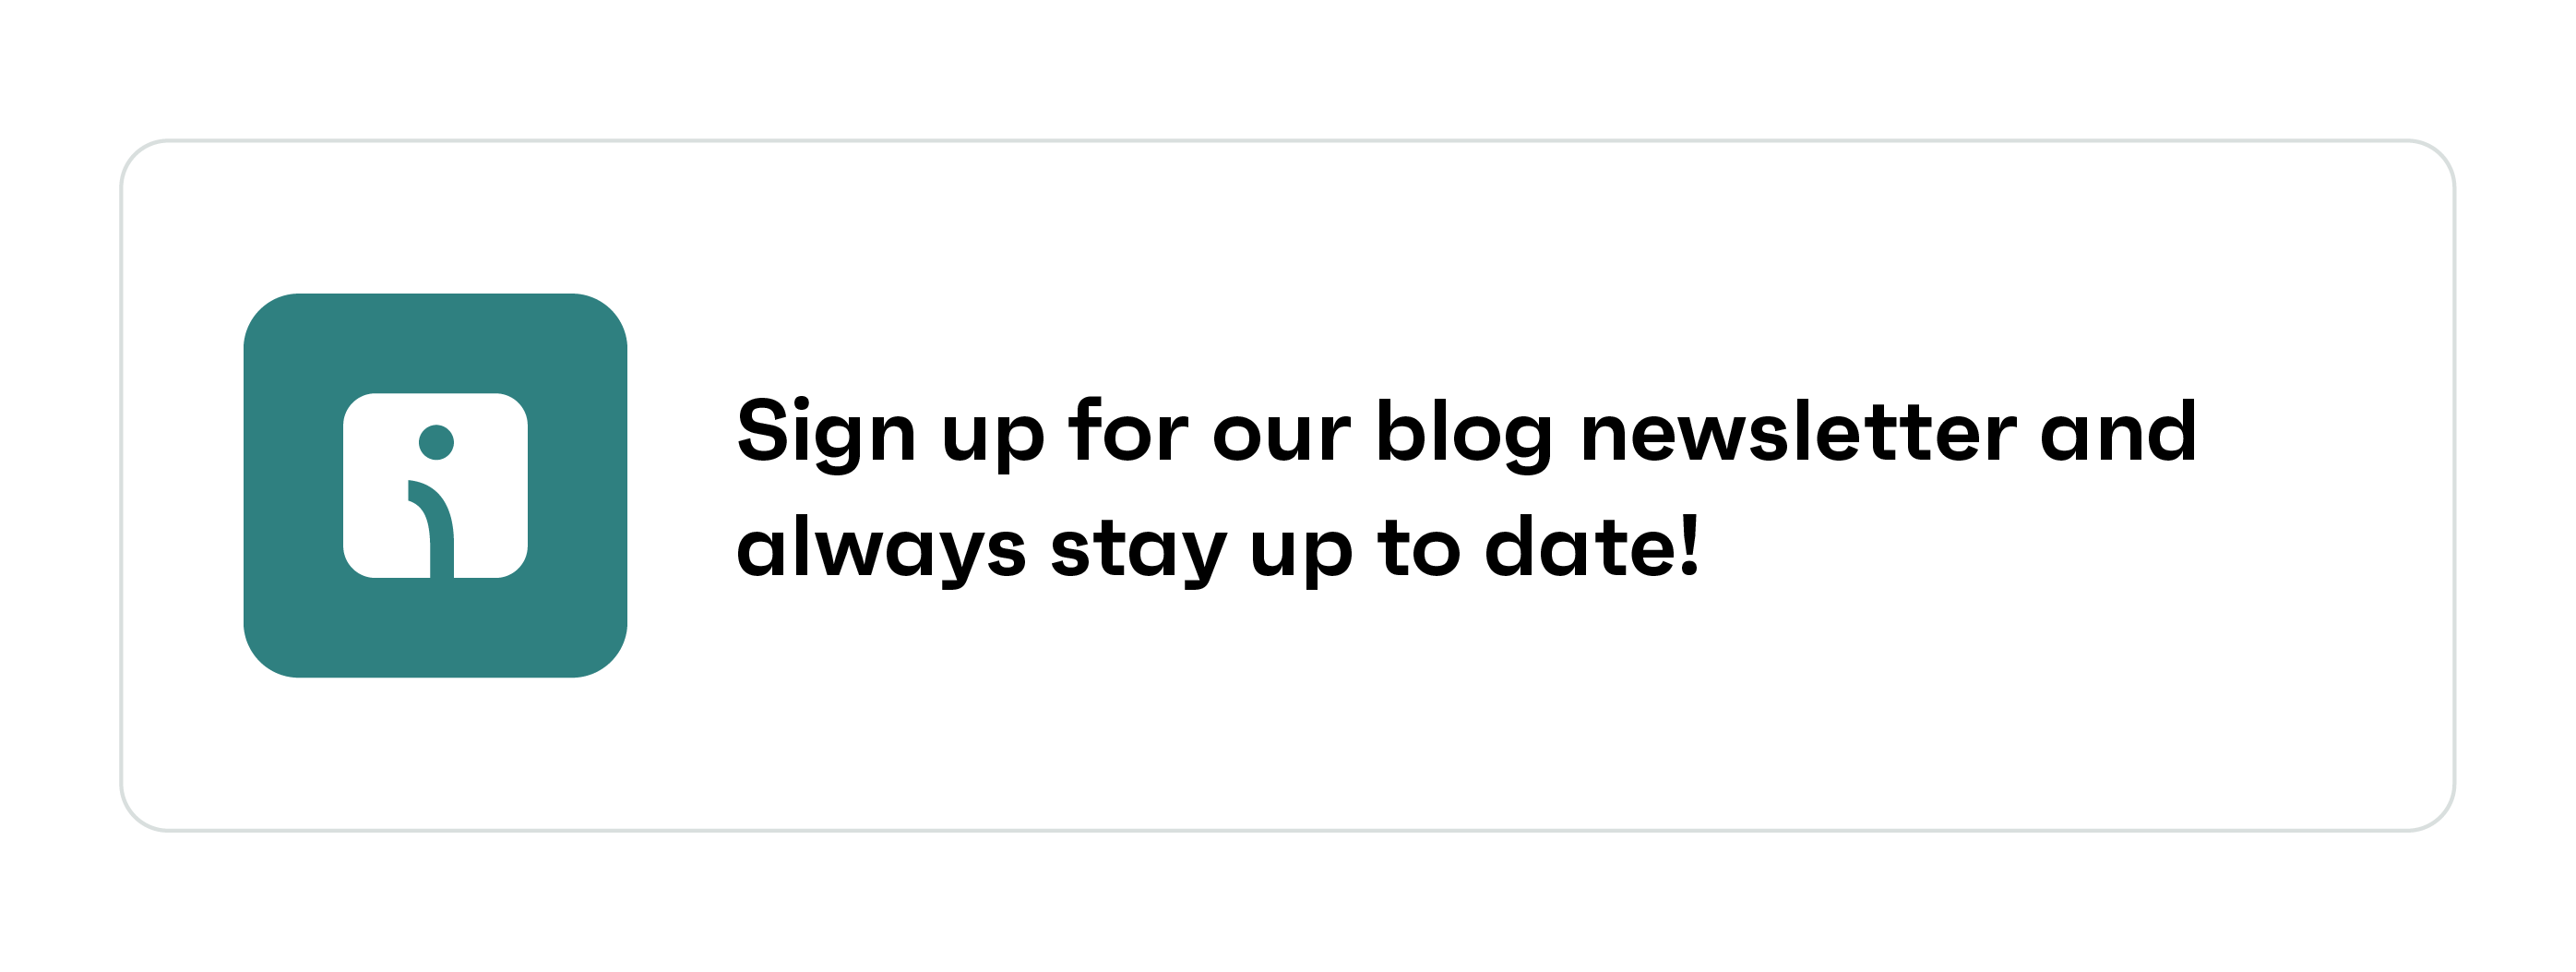 blog content signup push notification